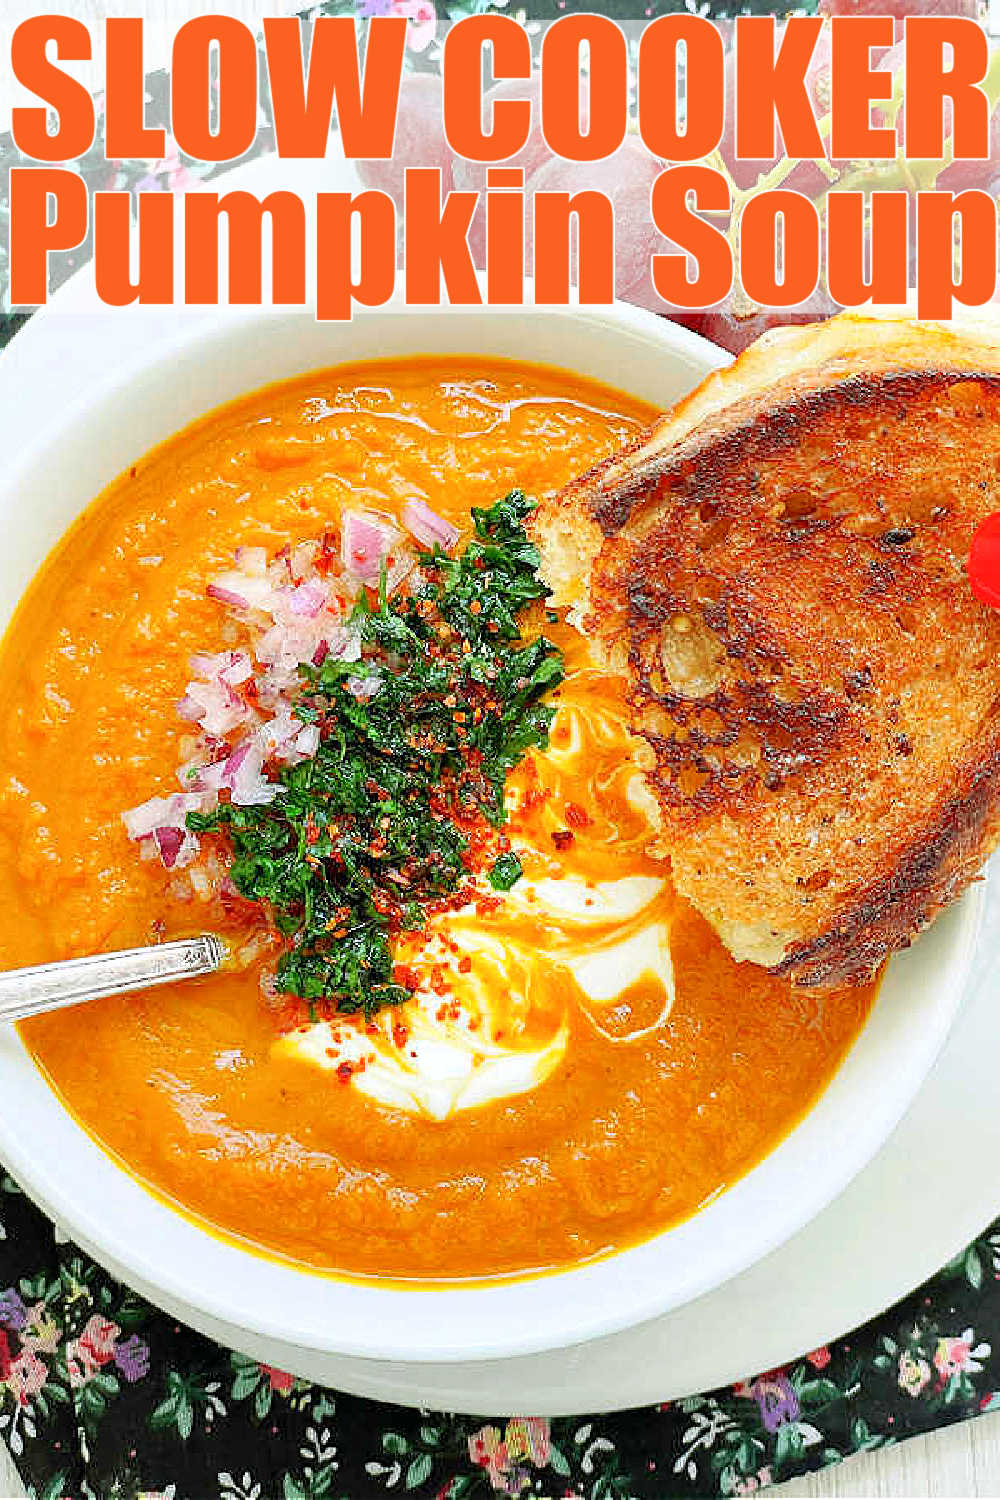 Slow Cooker Pumpkin Soup | Foodtastic Mom #slowcookerrecipes #crockpotrecipes #souprecipes #pumpkinrecipes #slowcookerpumpkinsoup